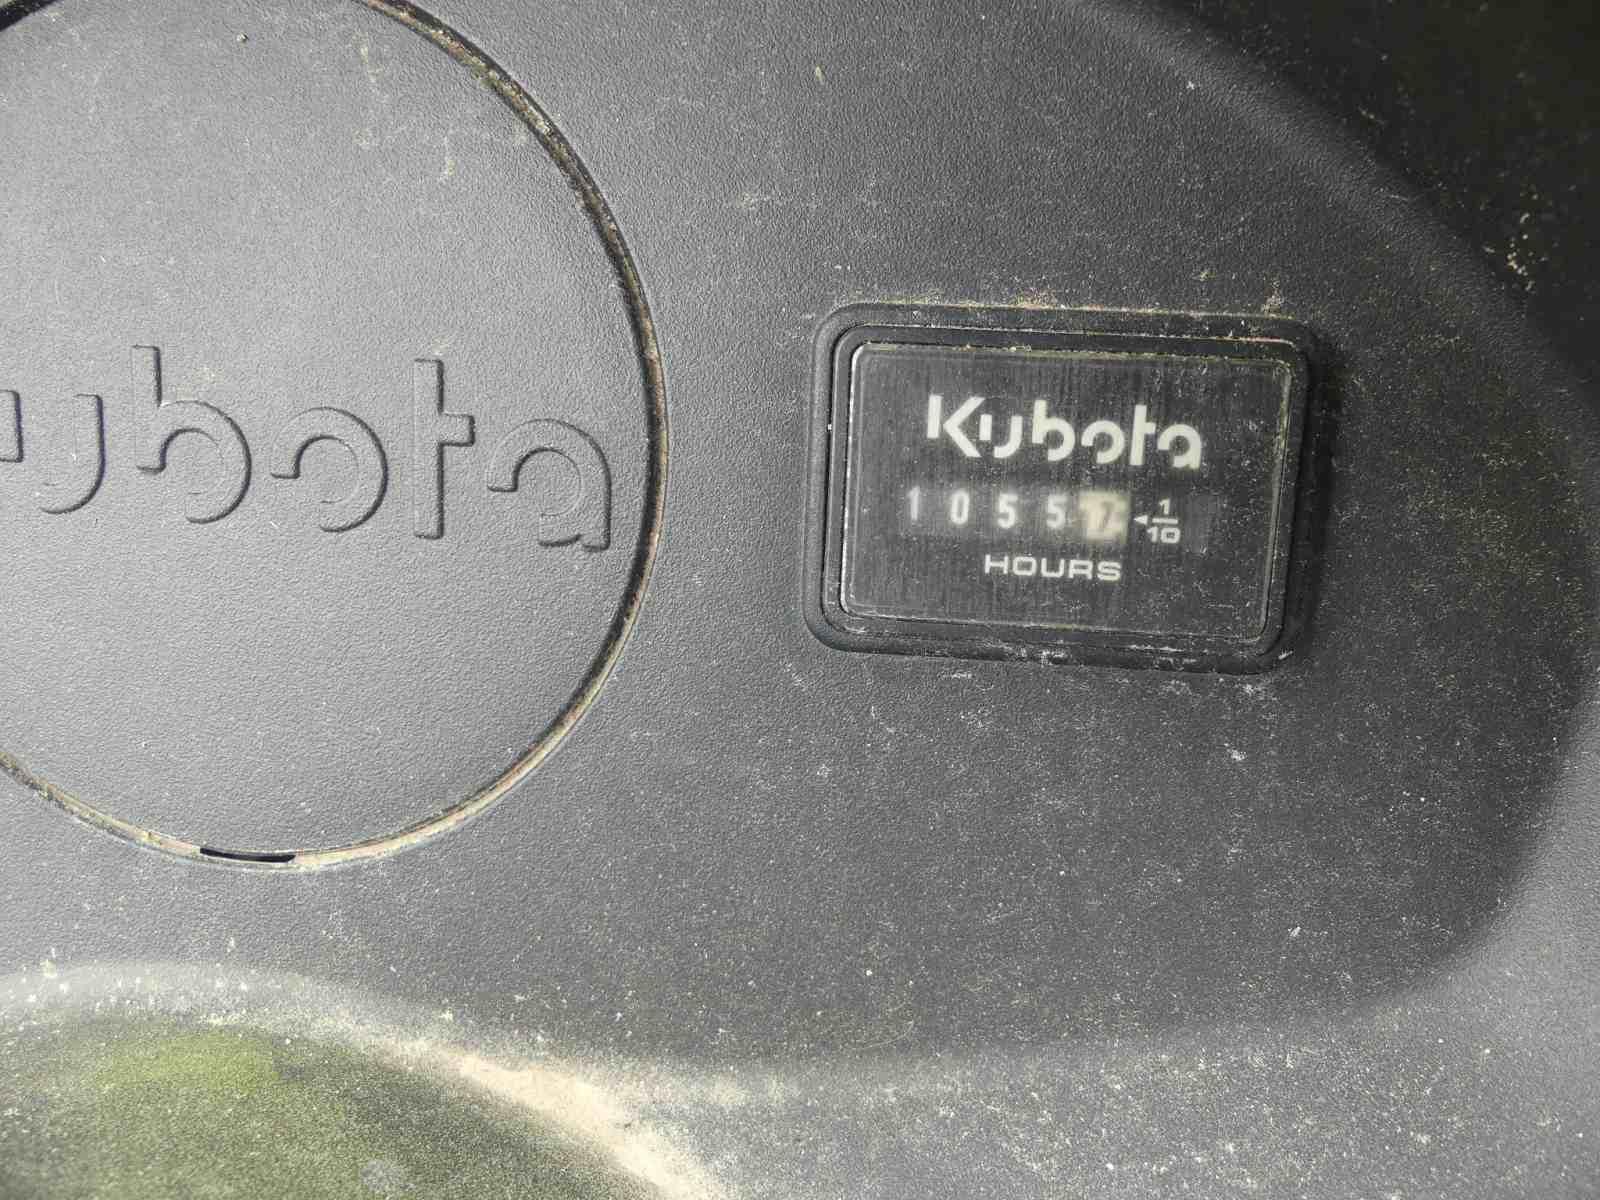 2005 Kubota RTV500 4WD Utility Vehicle, s/n KRTV500A91019767 (No Title - $5